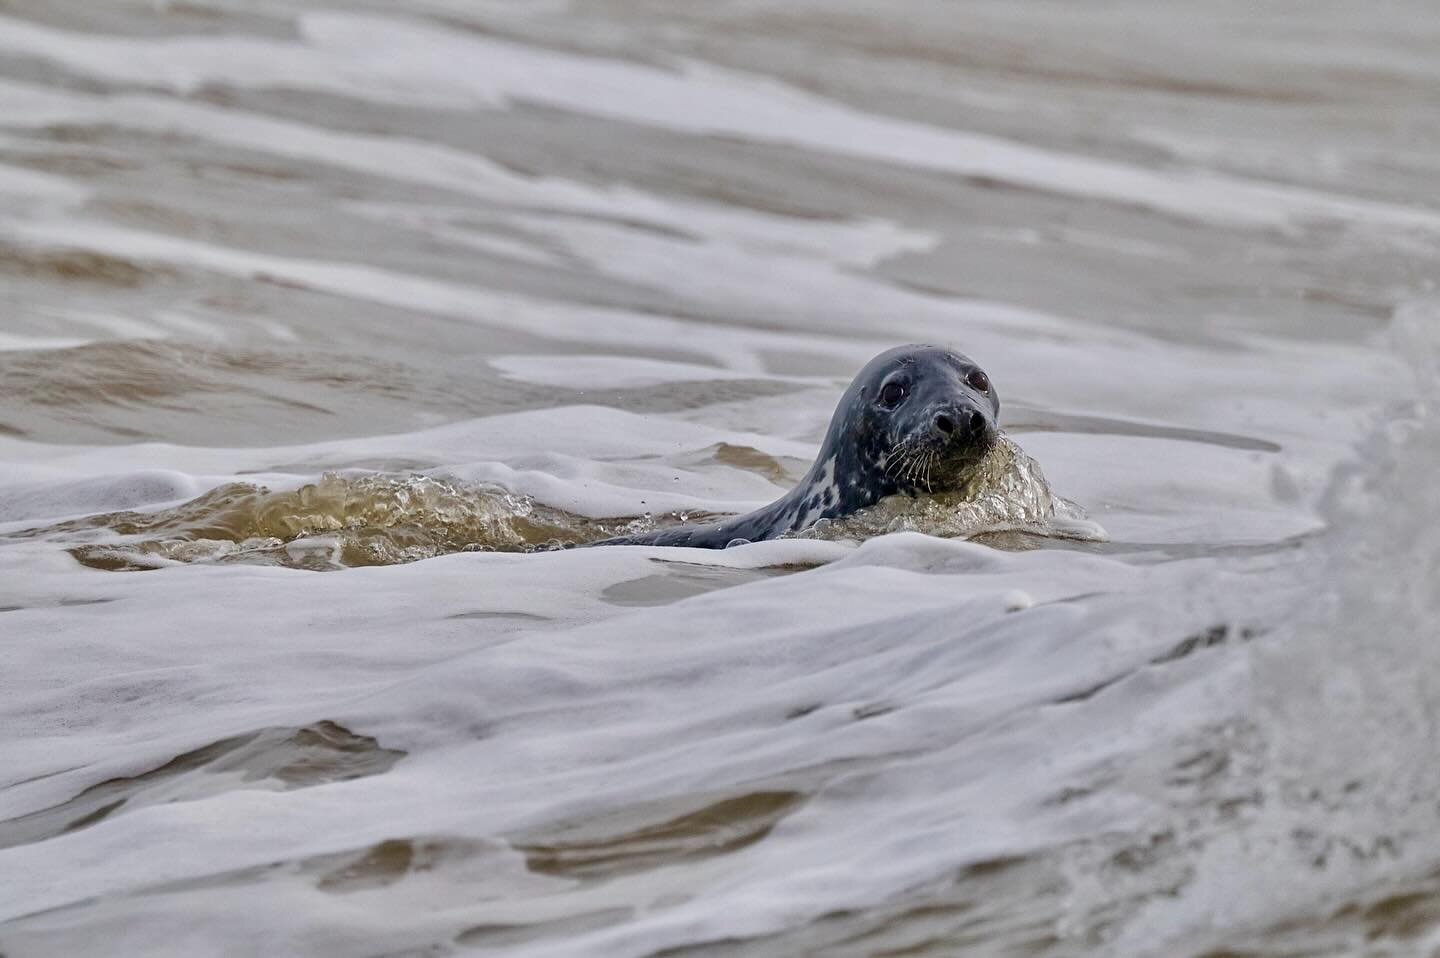 Grey seal swimming in the sea this morning #seal #greyseal #greyseals #sea #beach #coast #winterton #wintertononsea #norfolkcoast #naturephoto #wildlifephotographer #wildlifephotos #aywmc280324 #ayearwithmycamera #aywmc